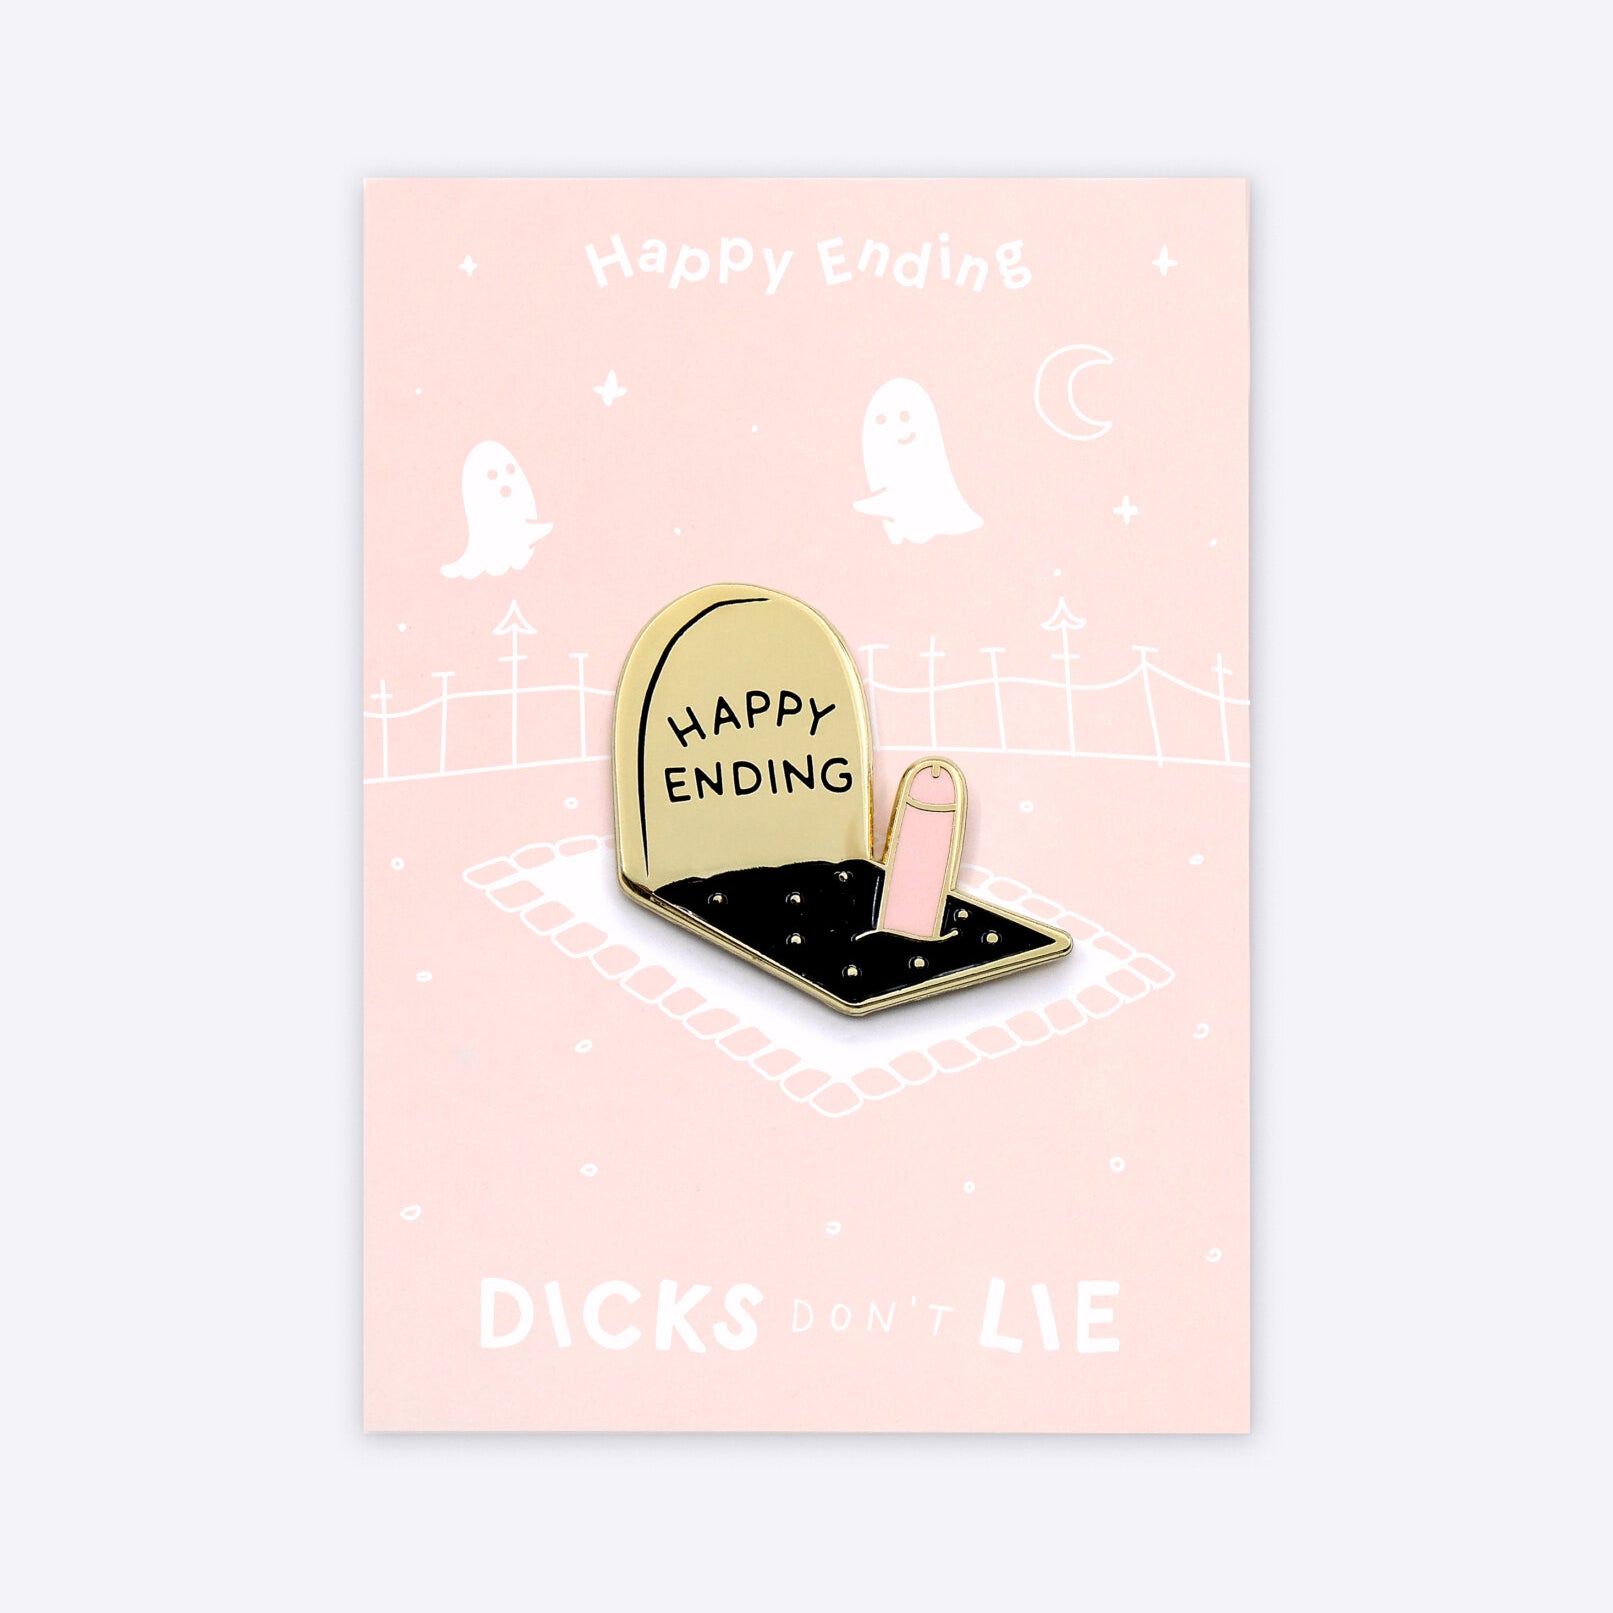 Dicks Don't Lie Happy Ending - Pin